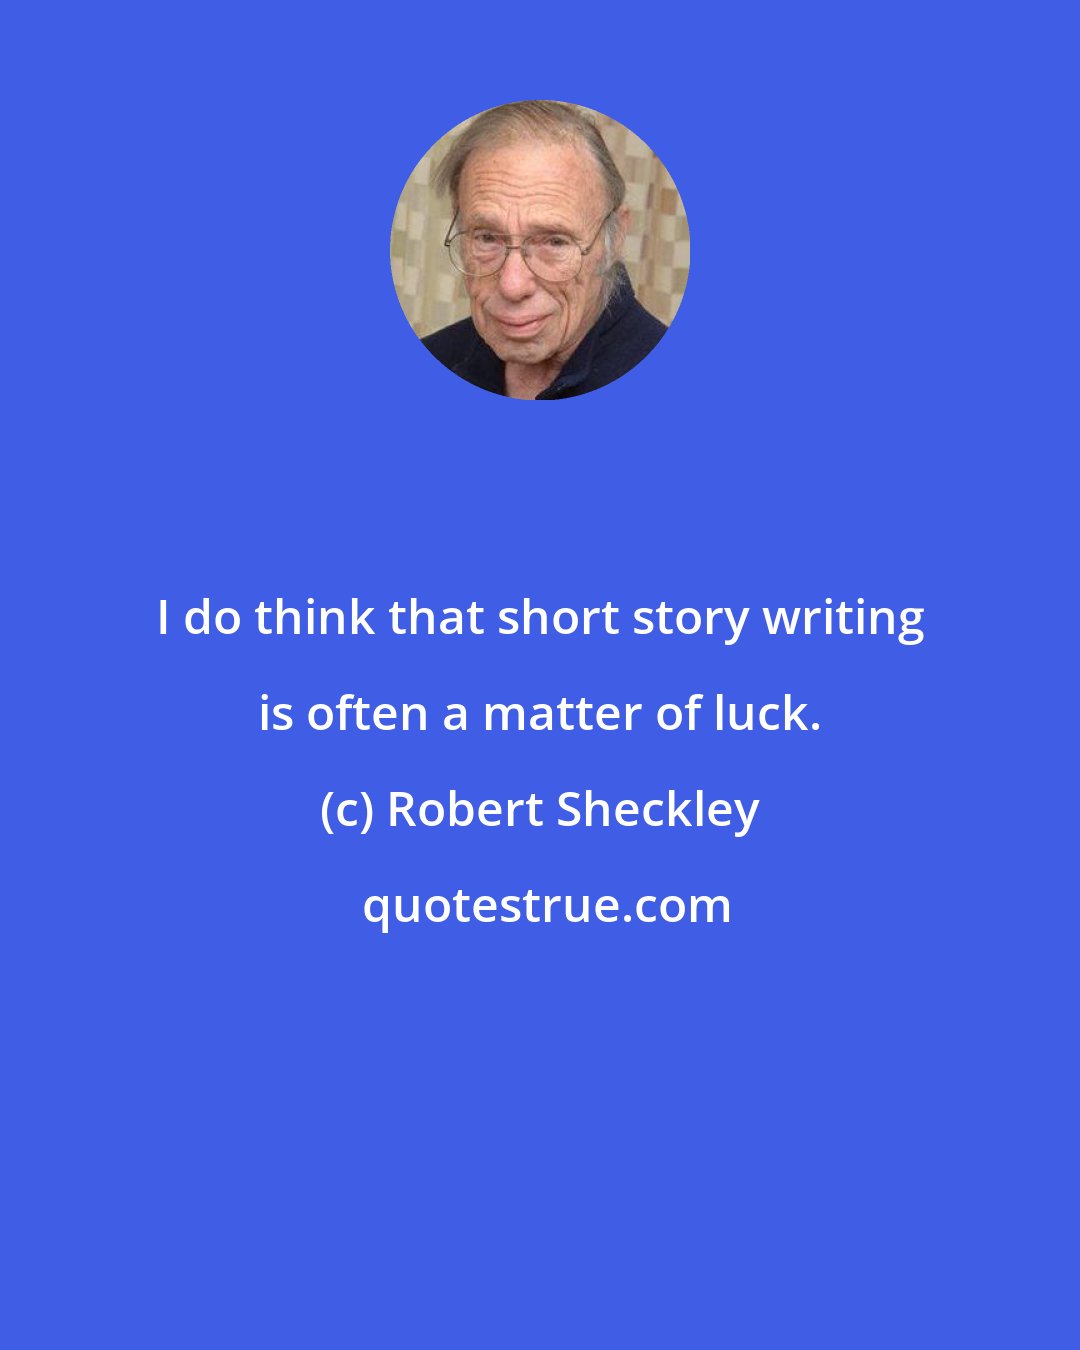 Robert Sheckley: I do think that short story writing is often a matter of luck.